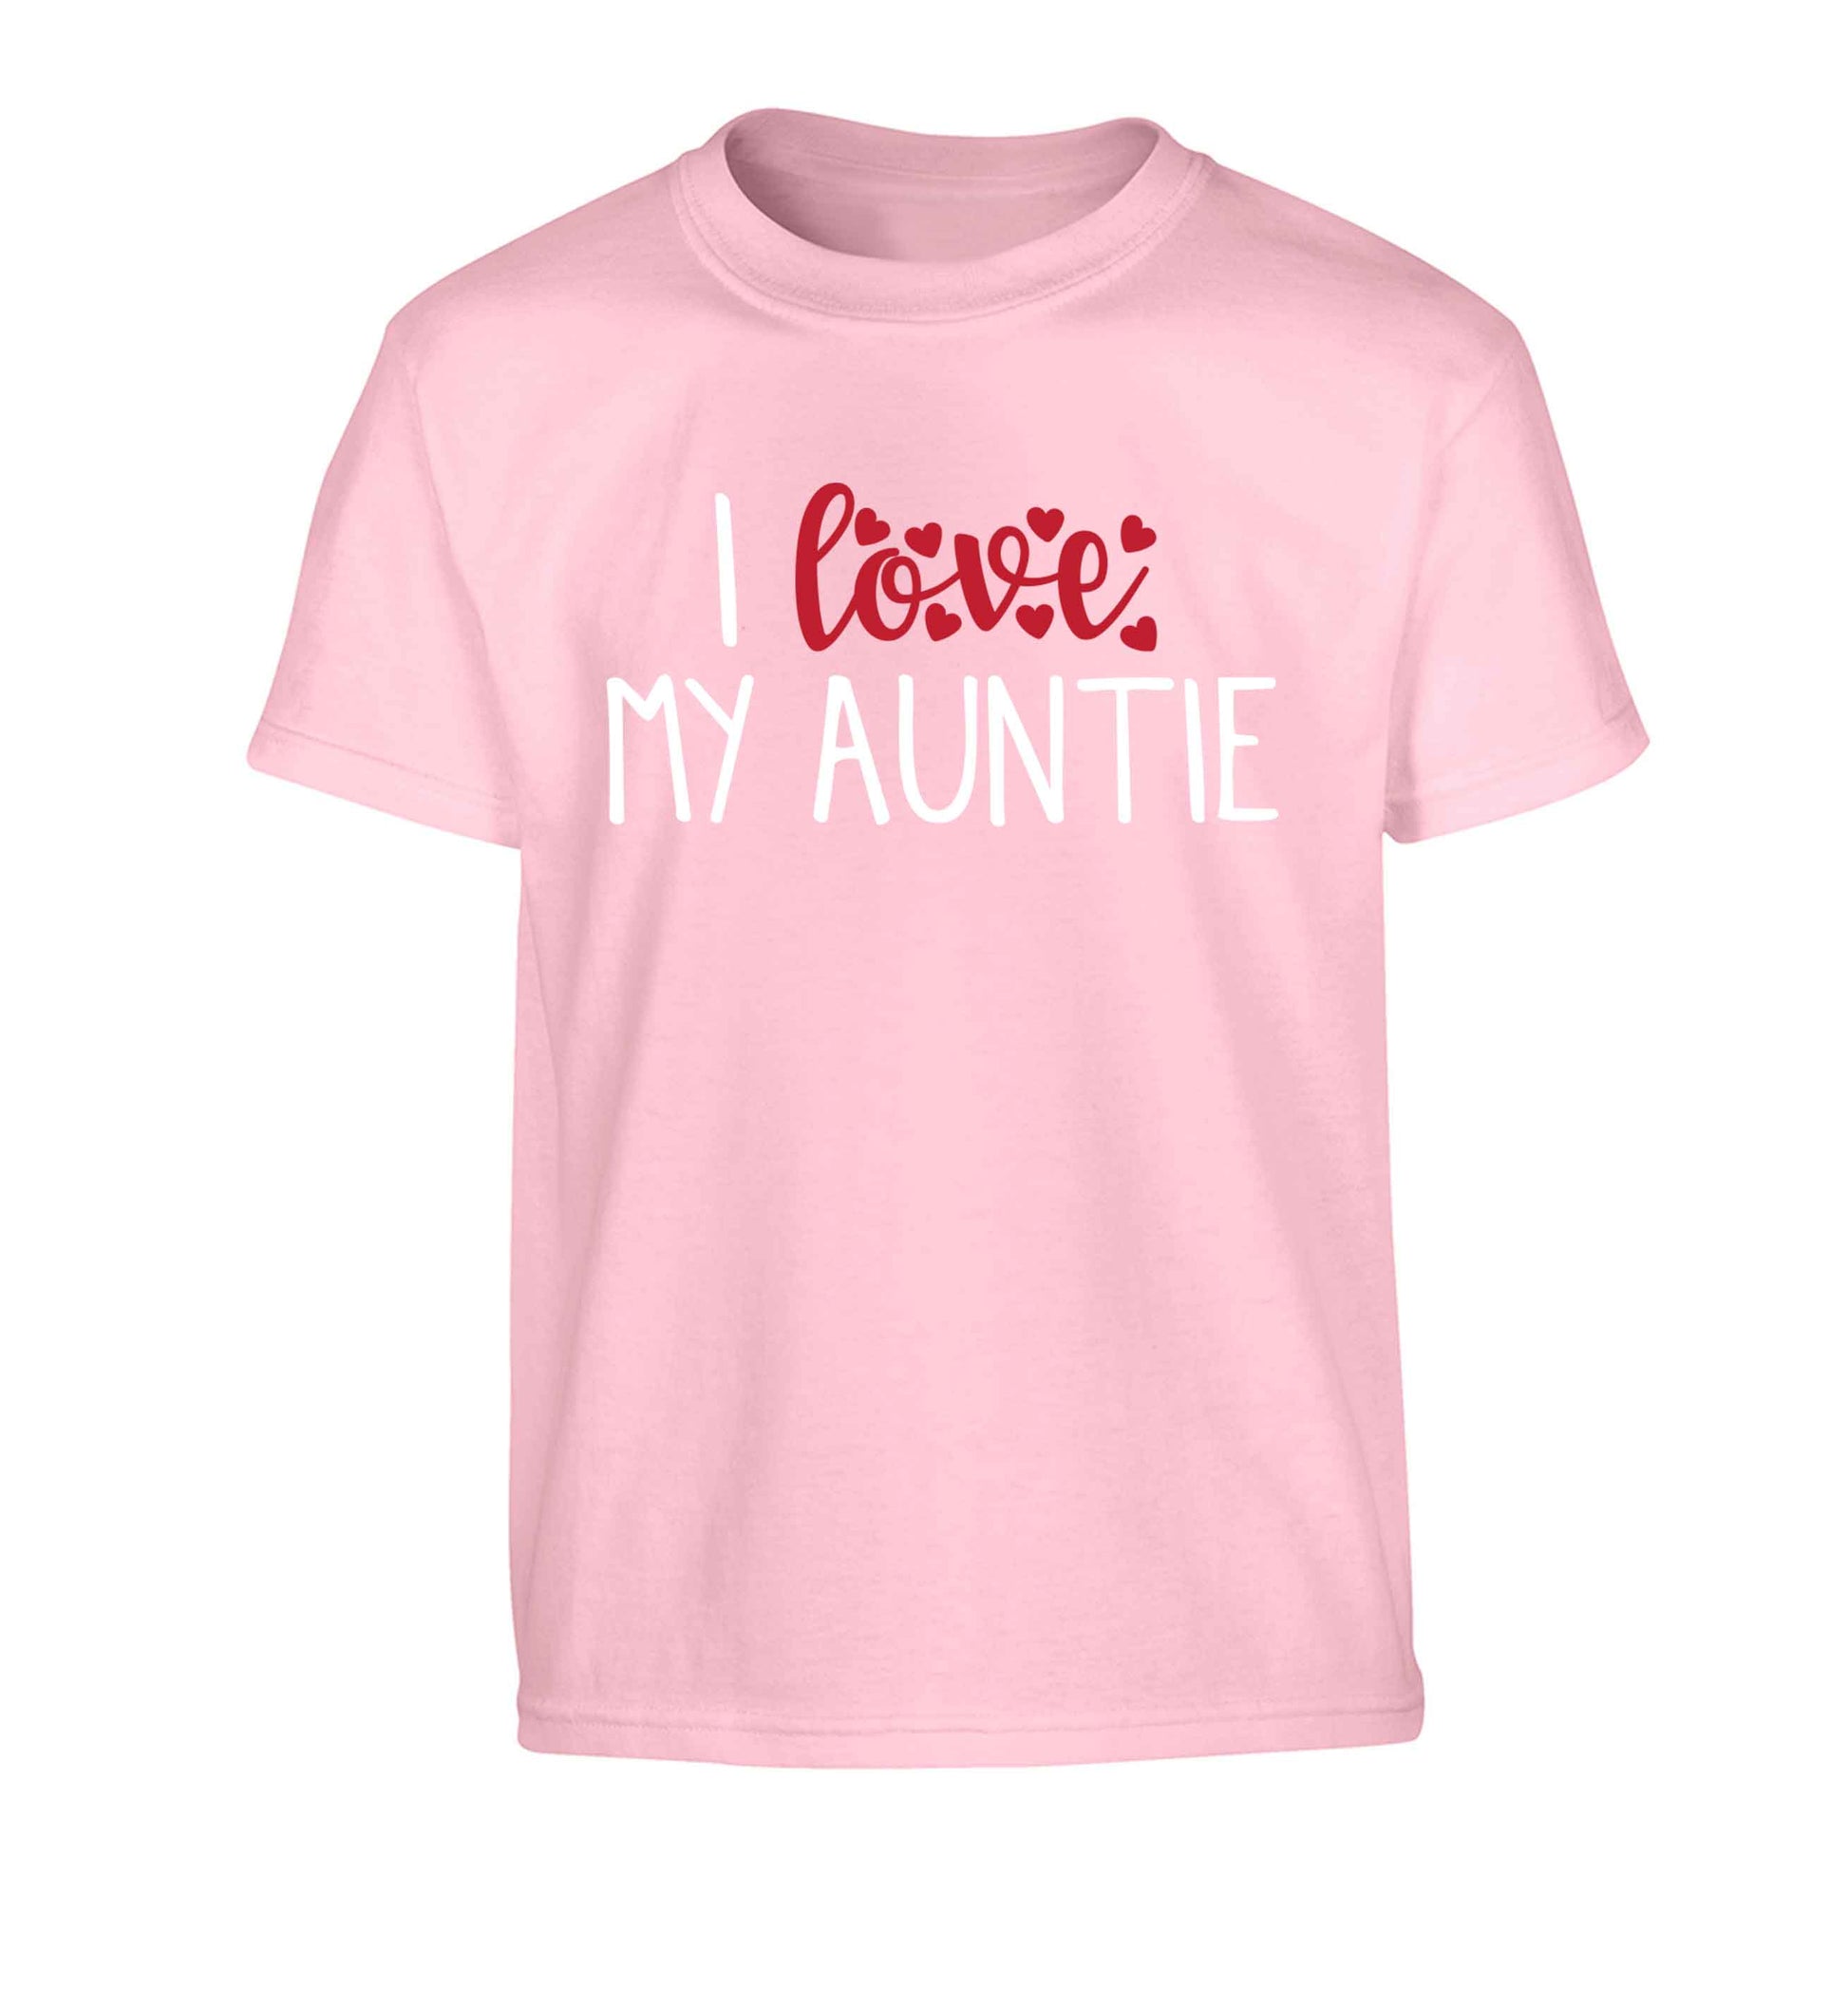 I love my auntie Children's light pink Tshirt 12-13 Years